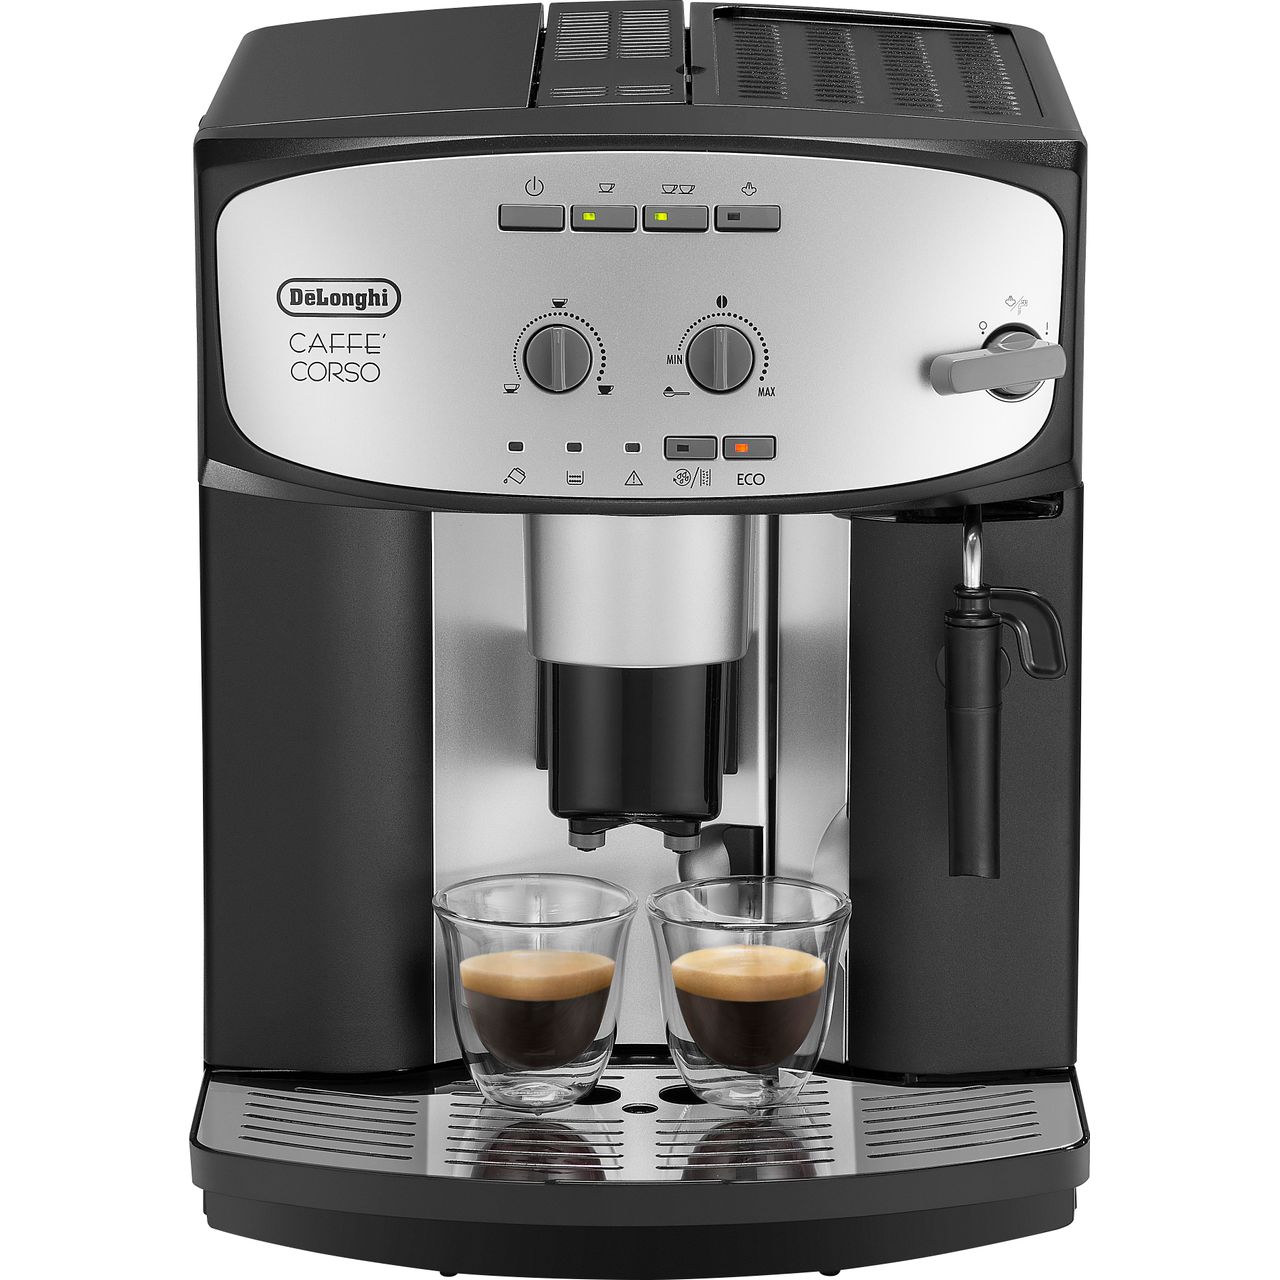 De'Longhi ESAM2800 Bean to Cup Coffee Machine Review